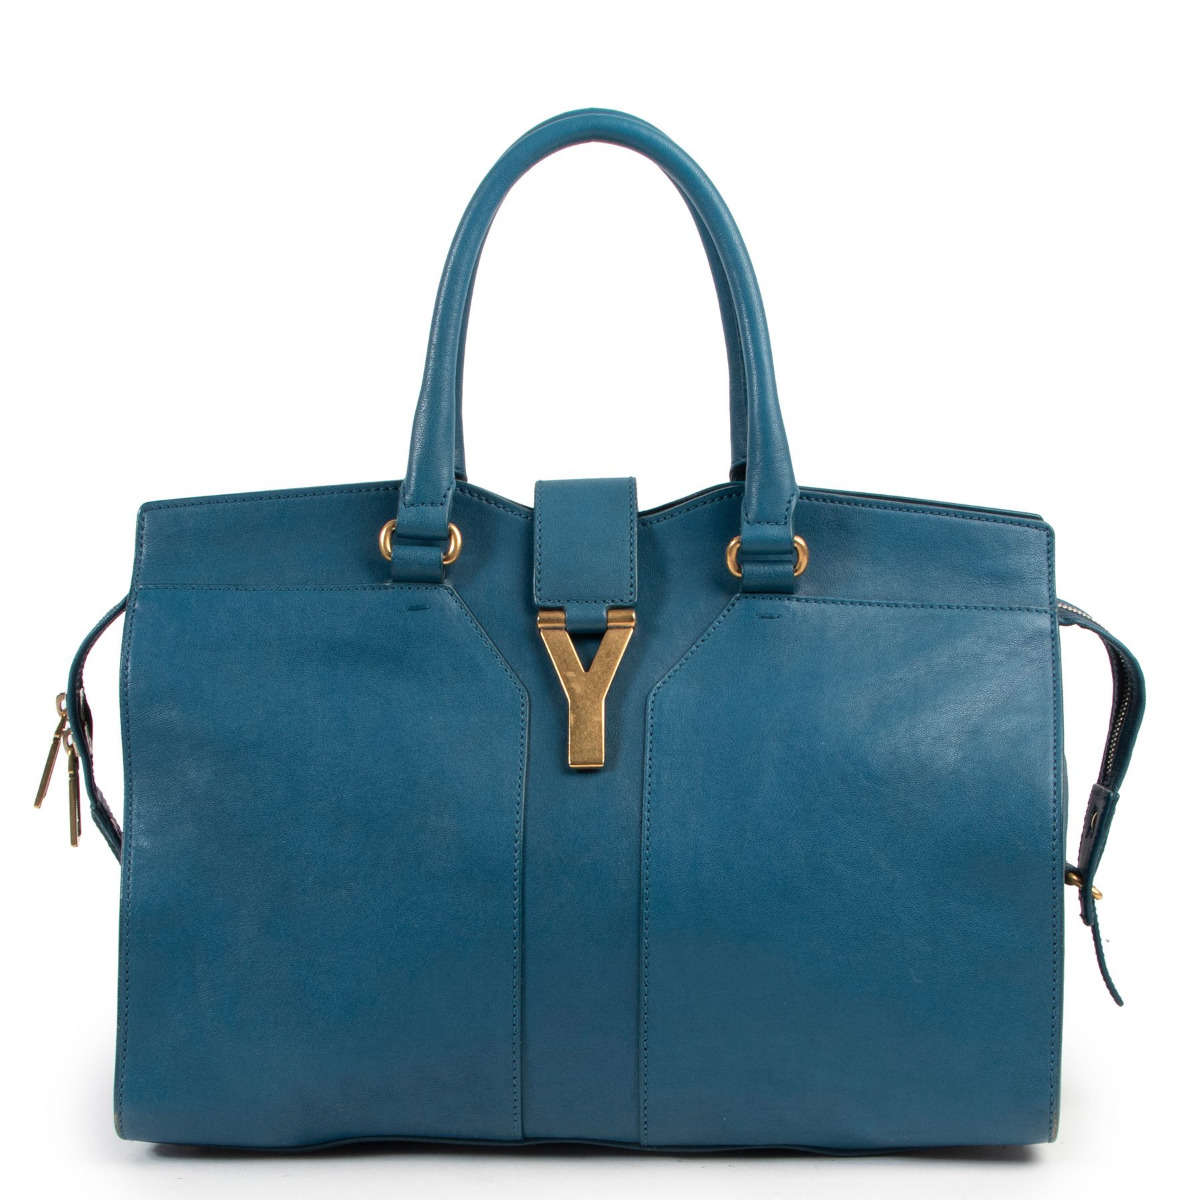 Yves Saint Laurent Light Blue Calfskin Leather Medium Cabas Chyc Bag